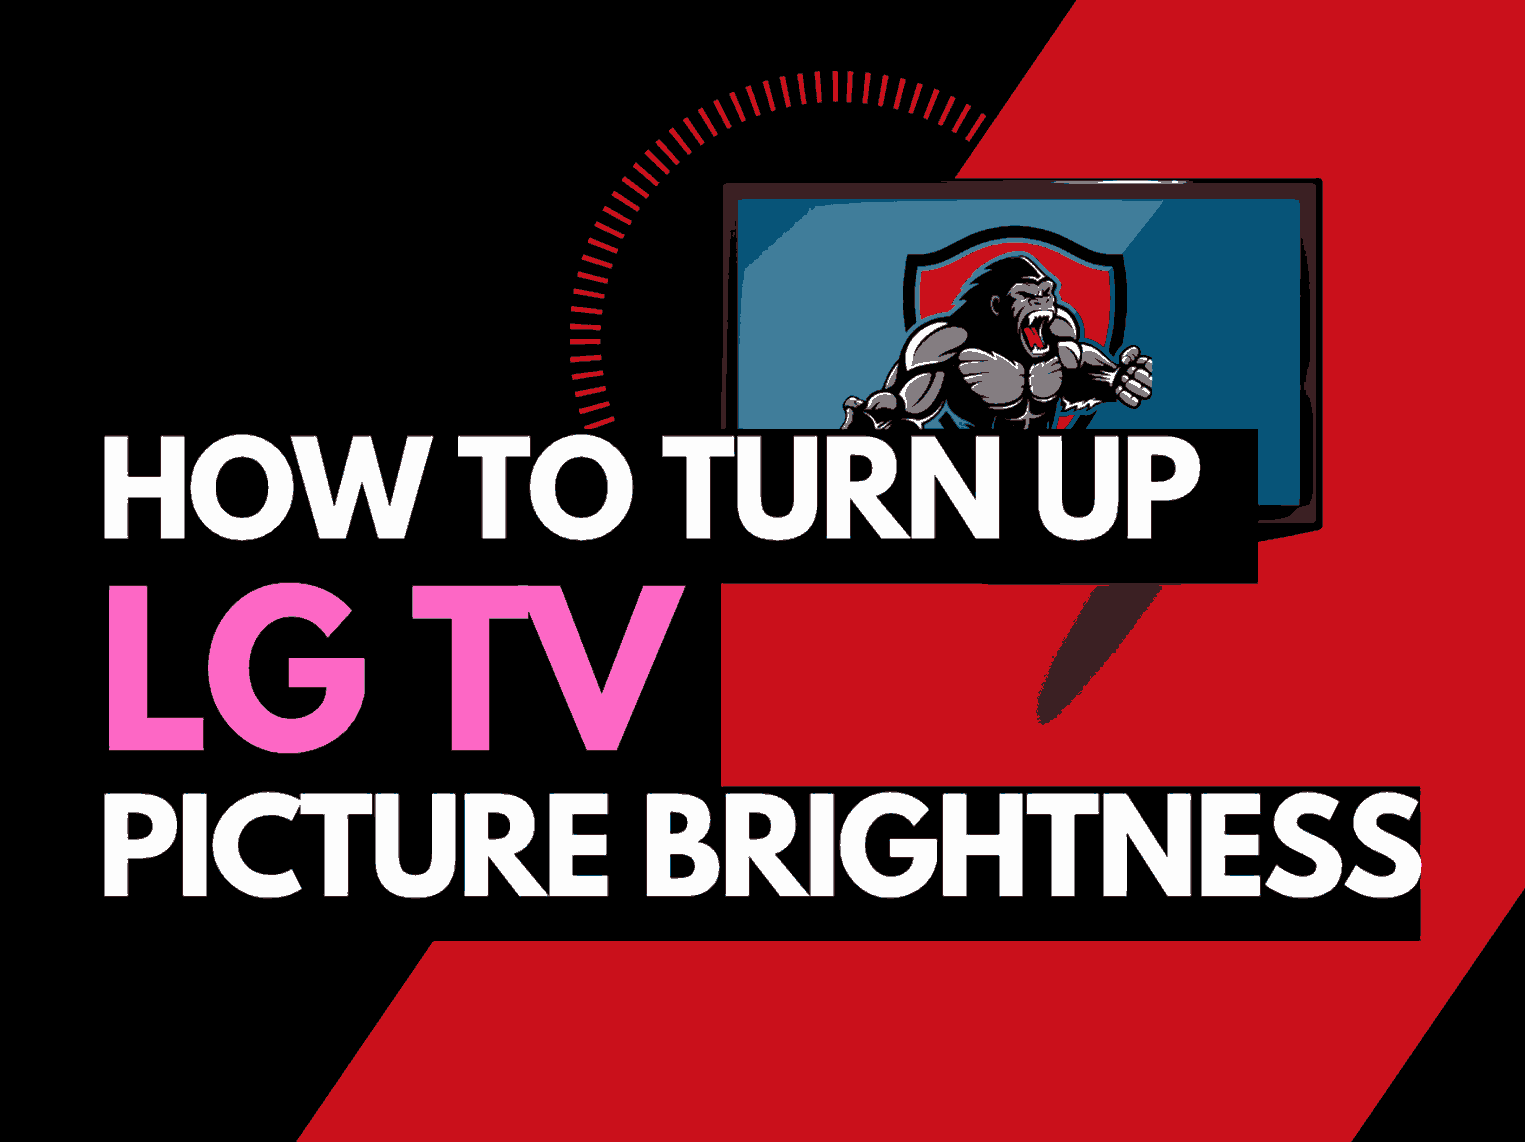 How To Turn Up Brightness on LG TV